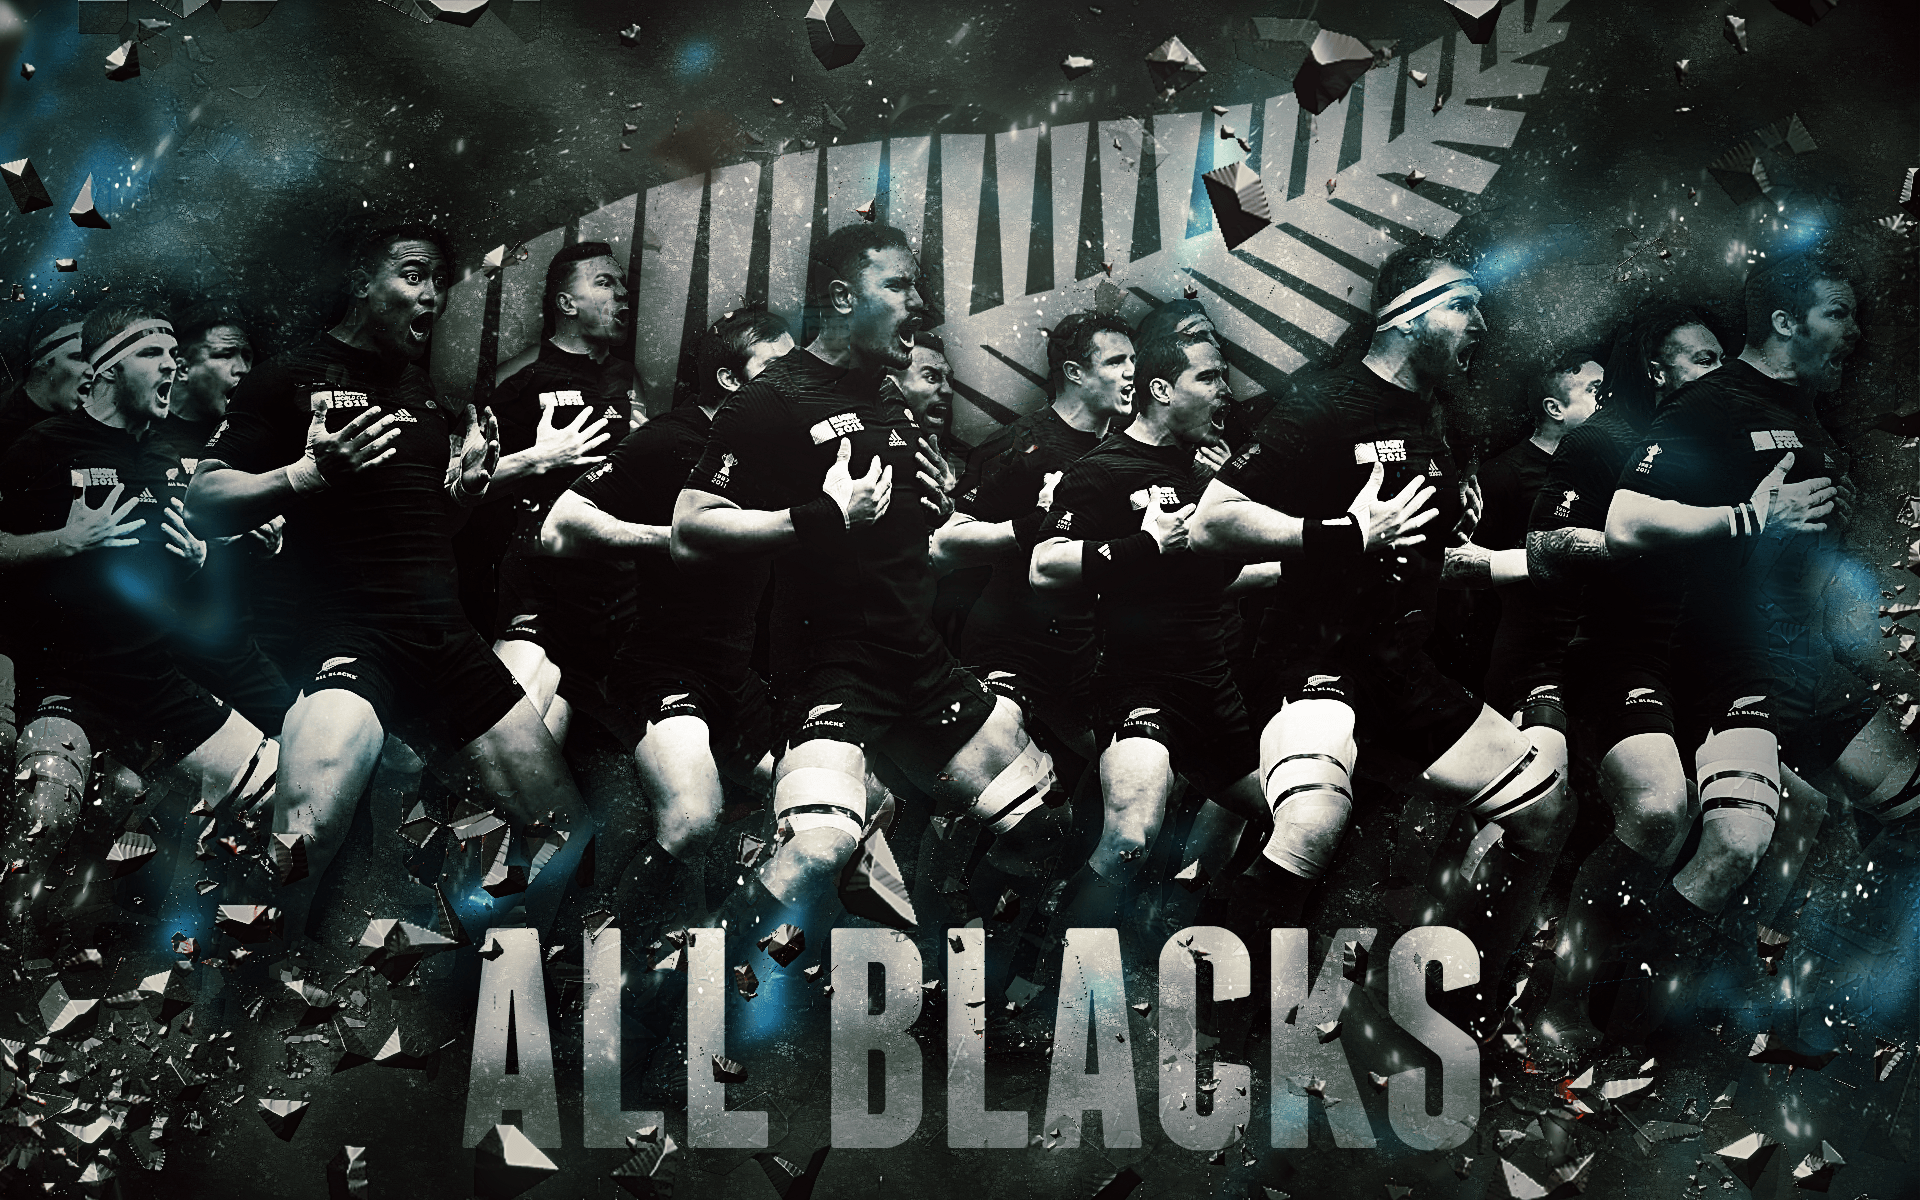 New Zealand All Black HD Wallpaper Free Download